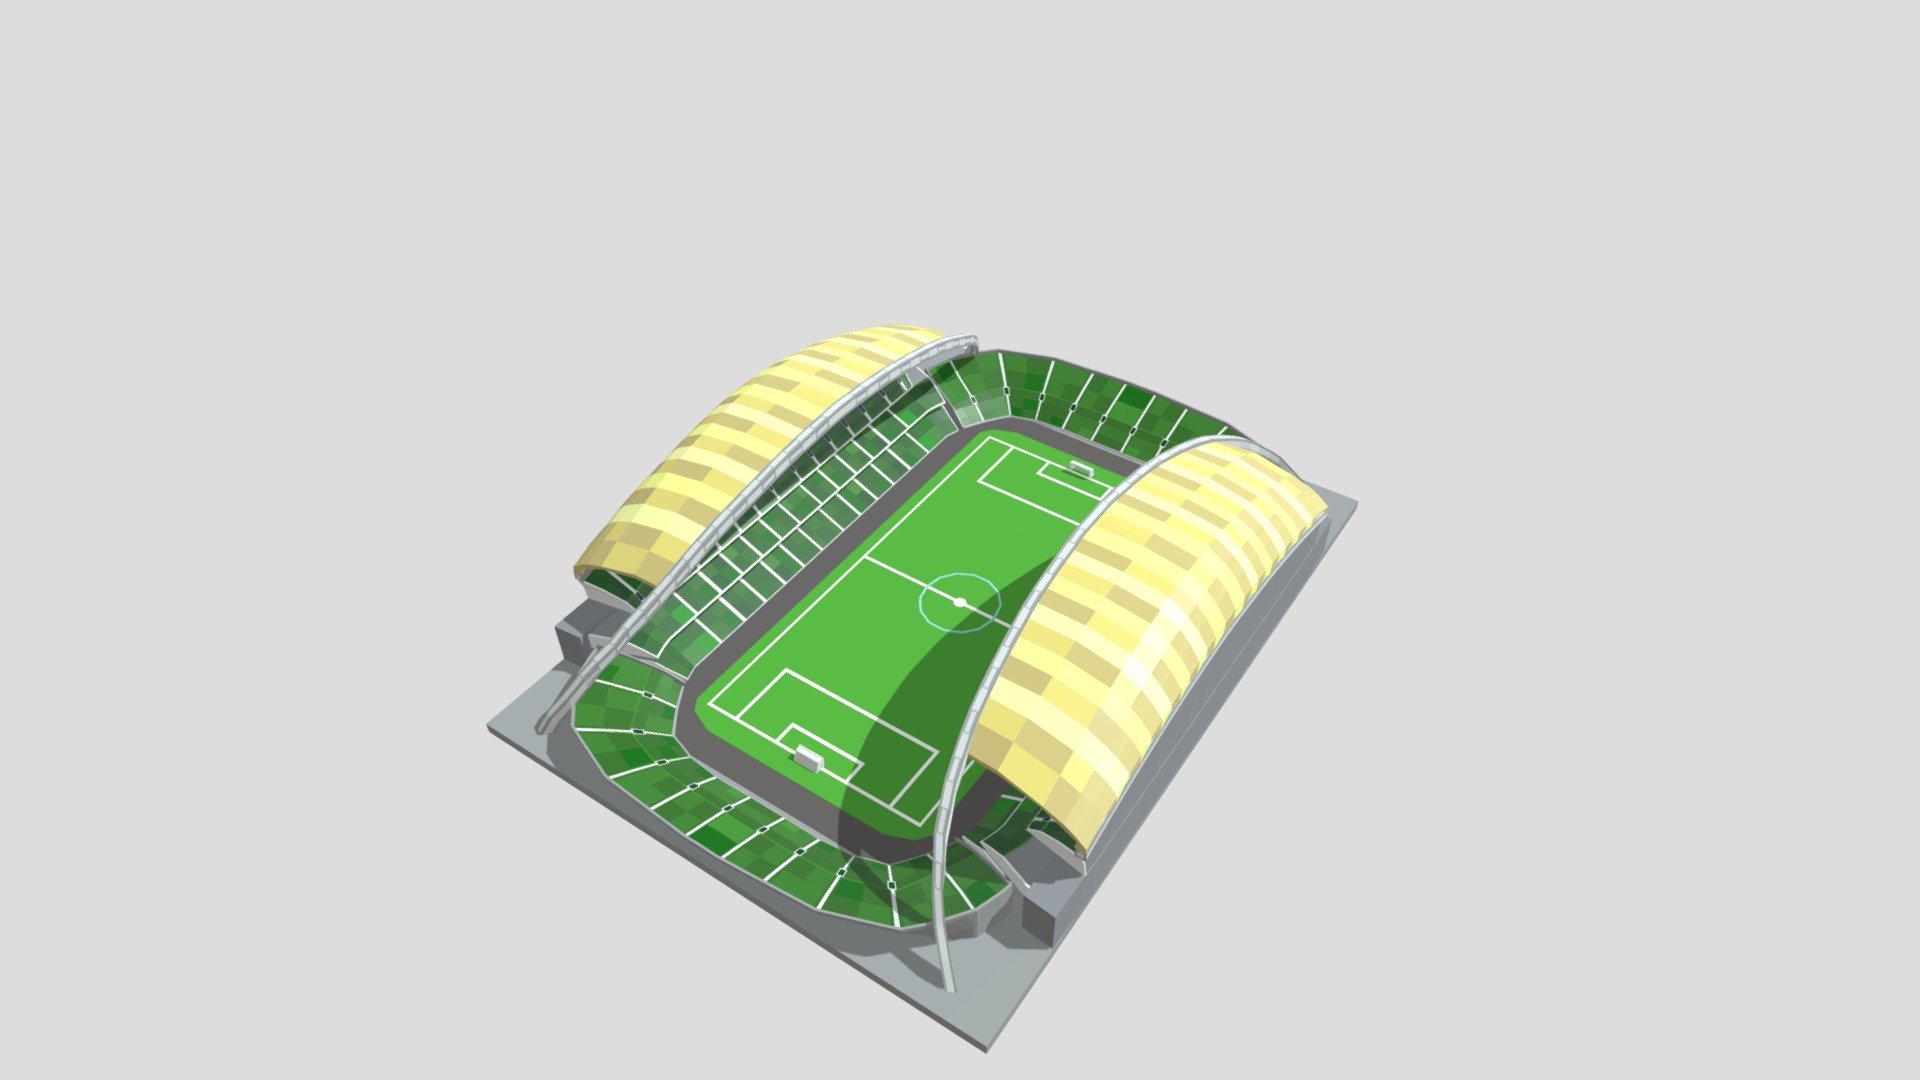 Hong Kong Stadium,
Foot Ball Playground,
Find out more at businessyuen.com - Hong Kong Stadium - Buy Royalty Free 3D model by businessyuen 3d model